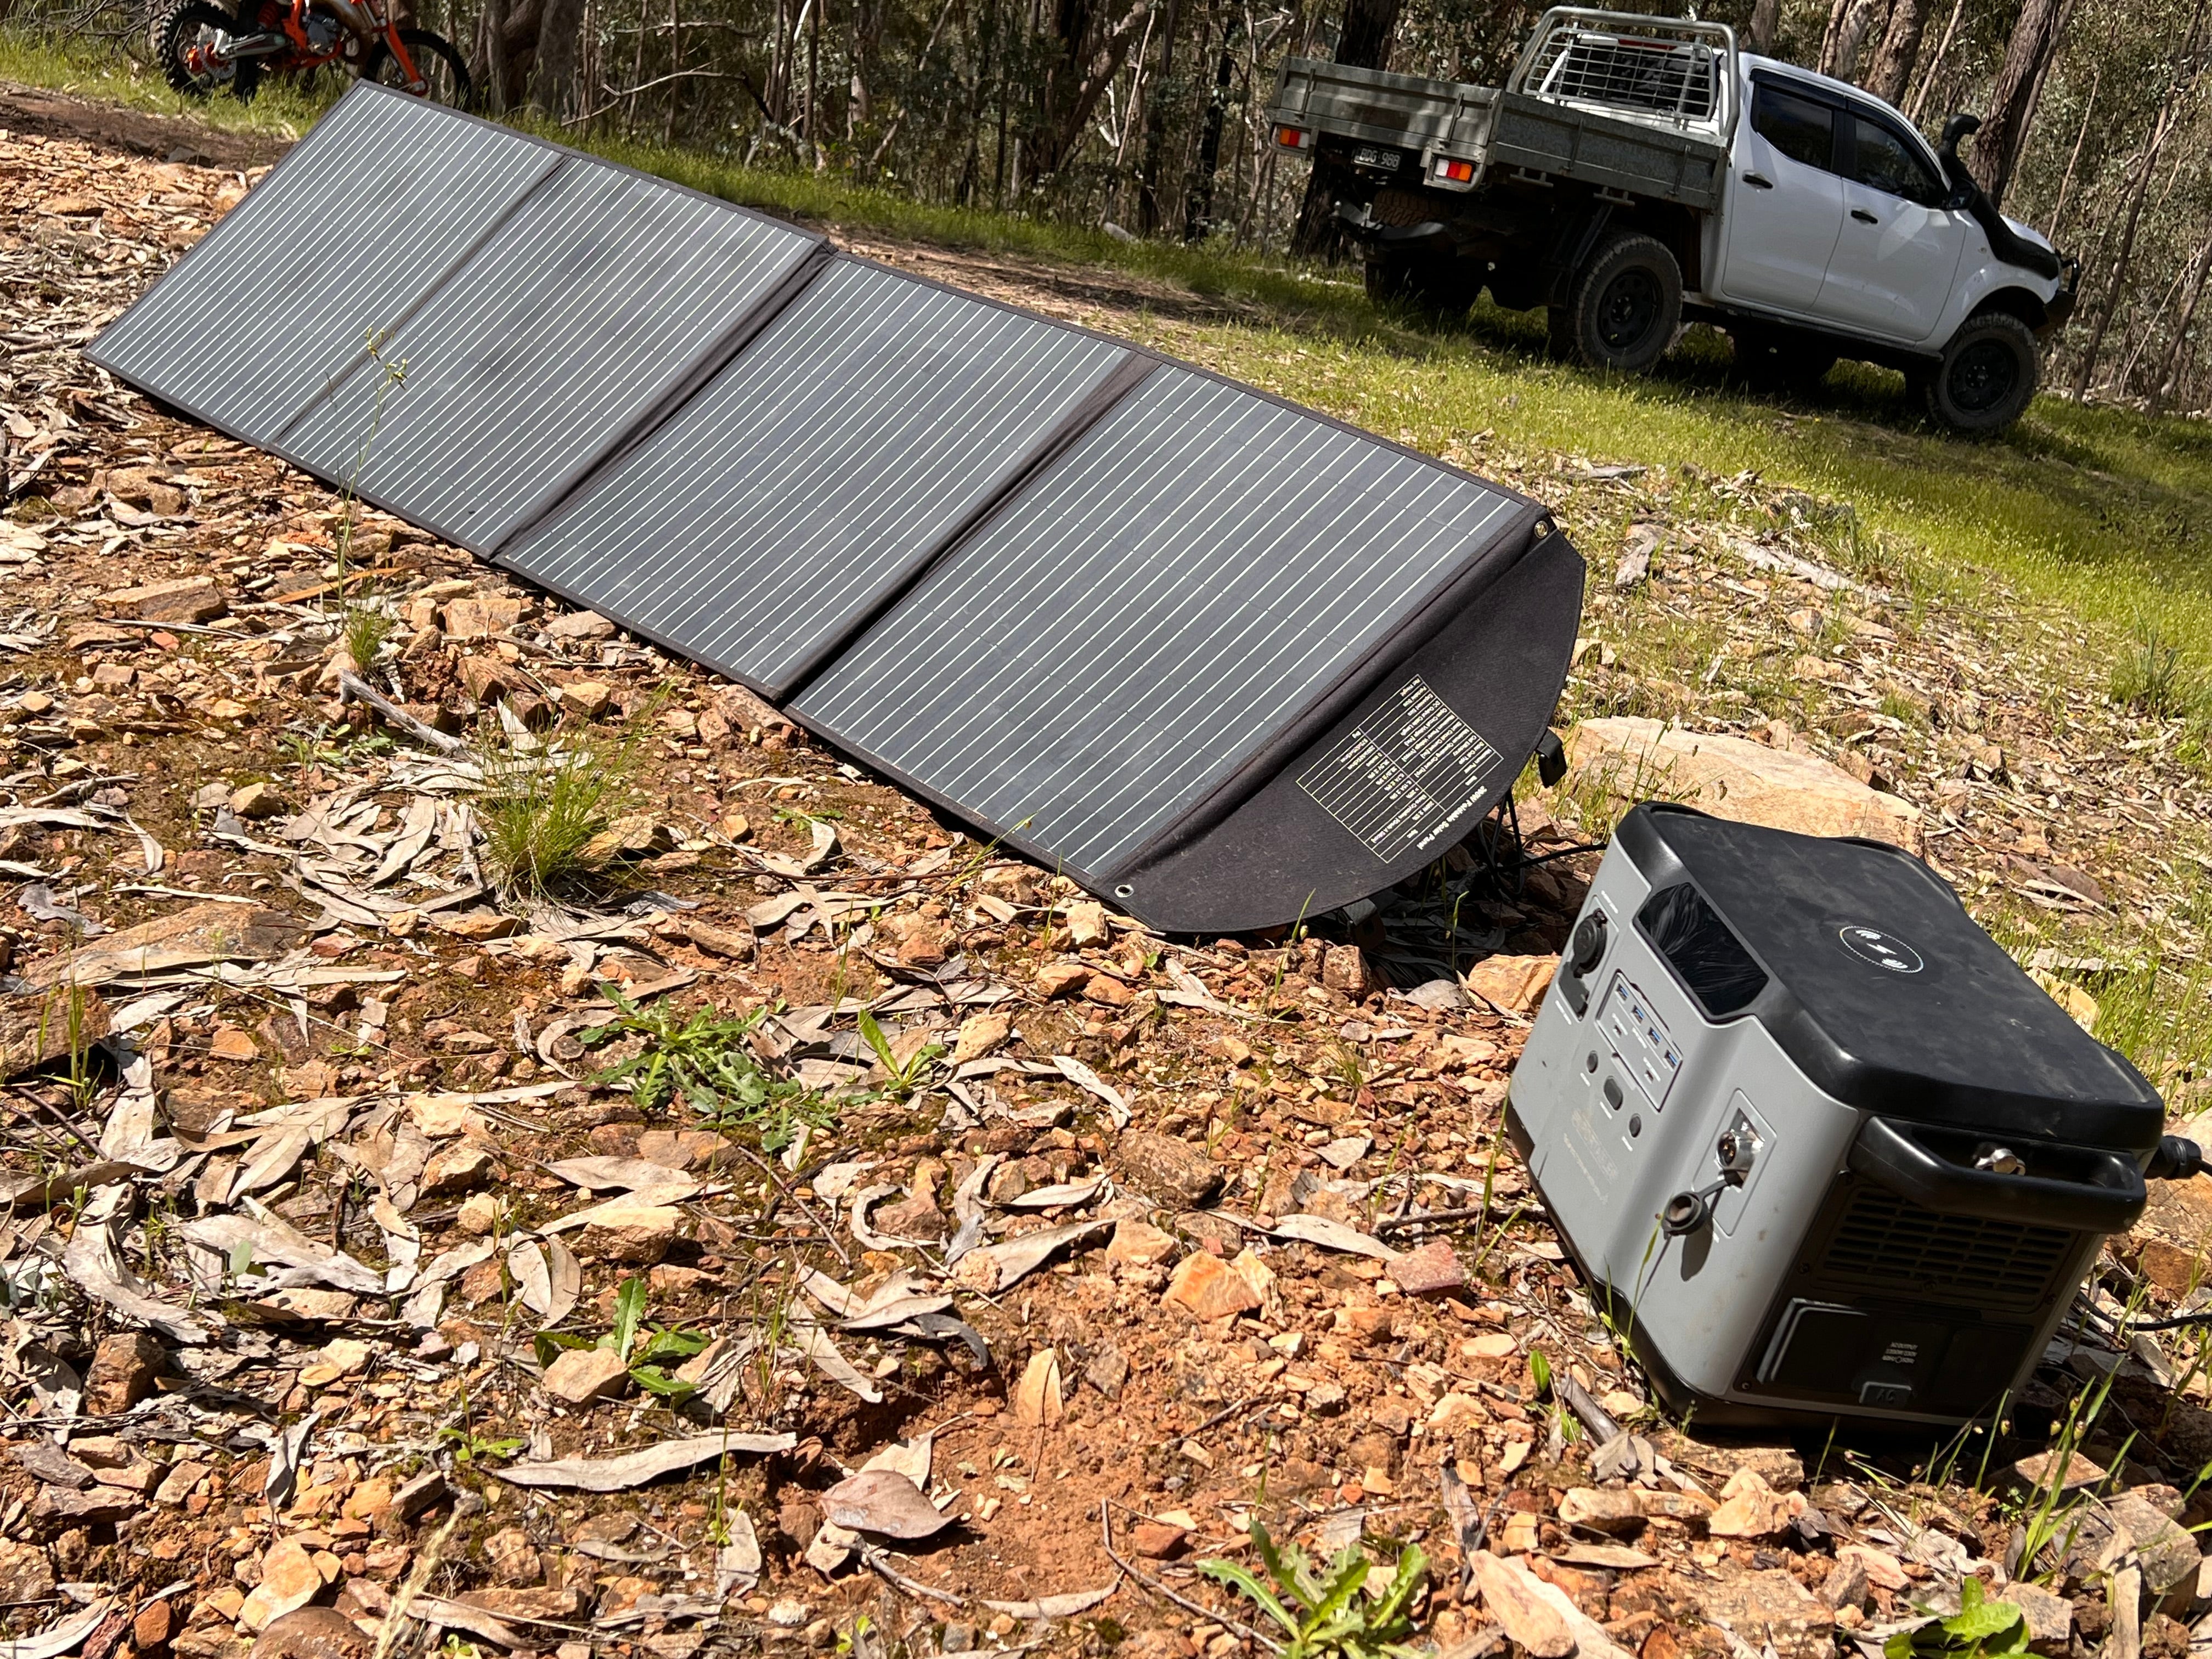 SR Portables Minotaur 1395wh 116ah Portable Lithium Solar Generator Plus 200w Solar Panel